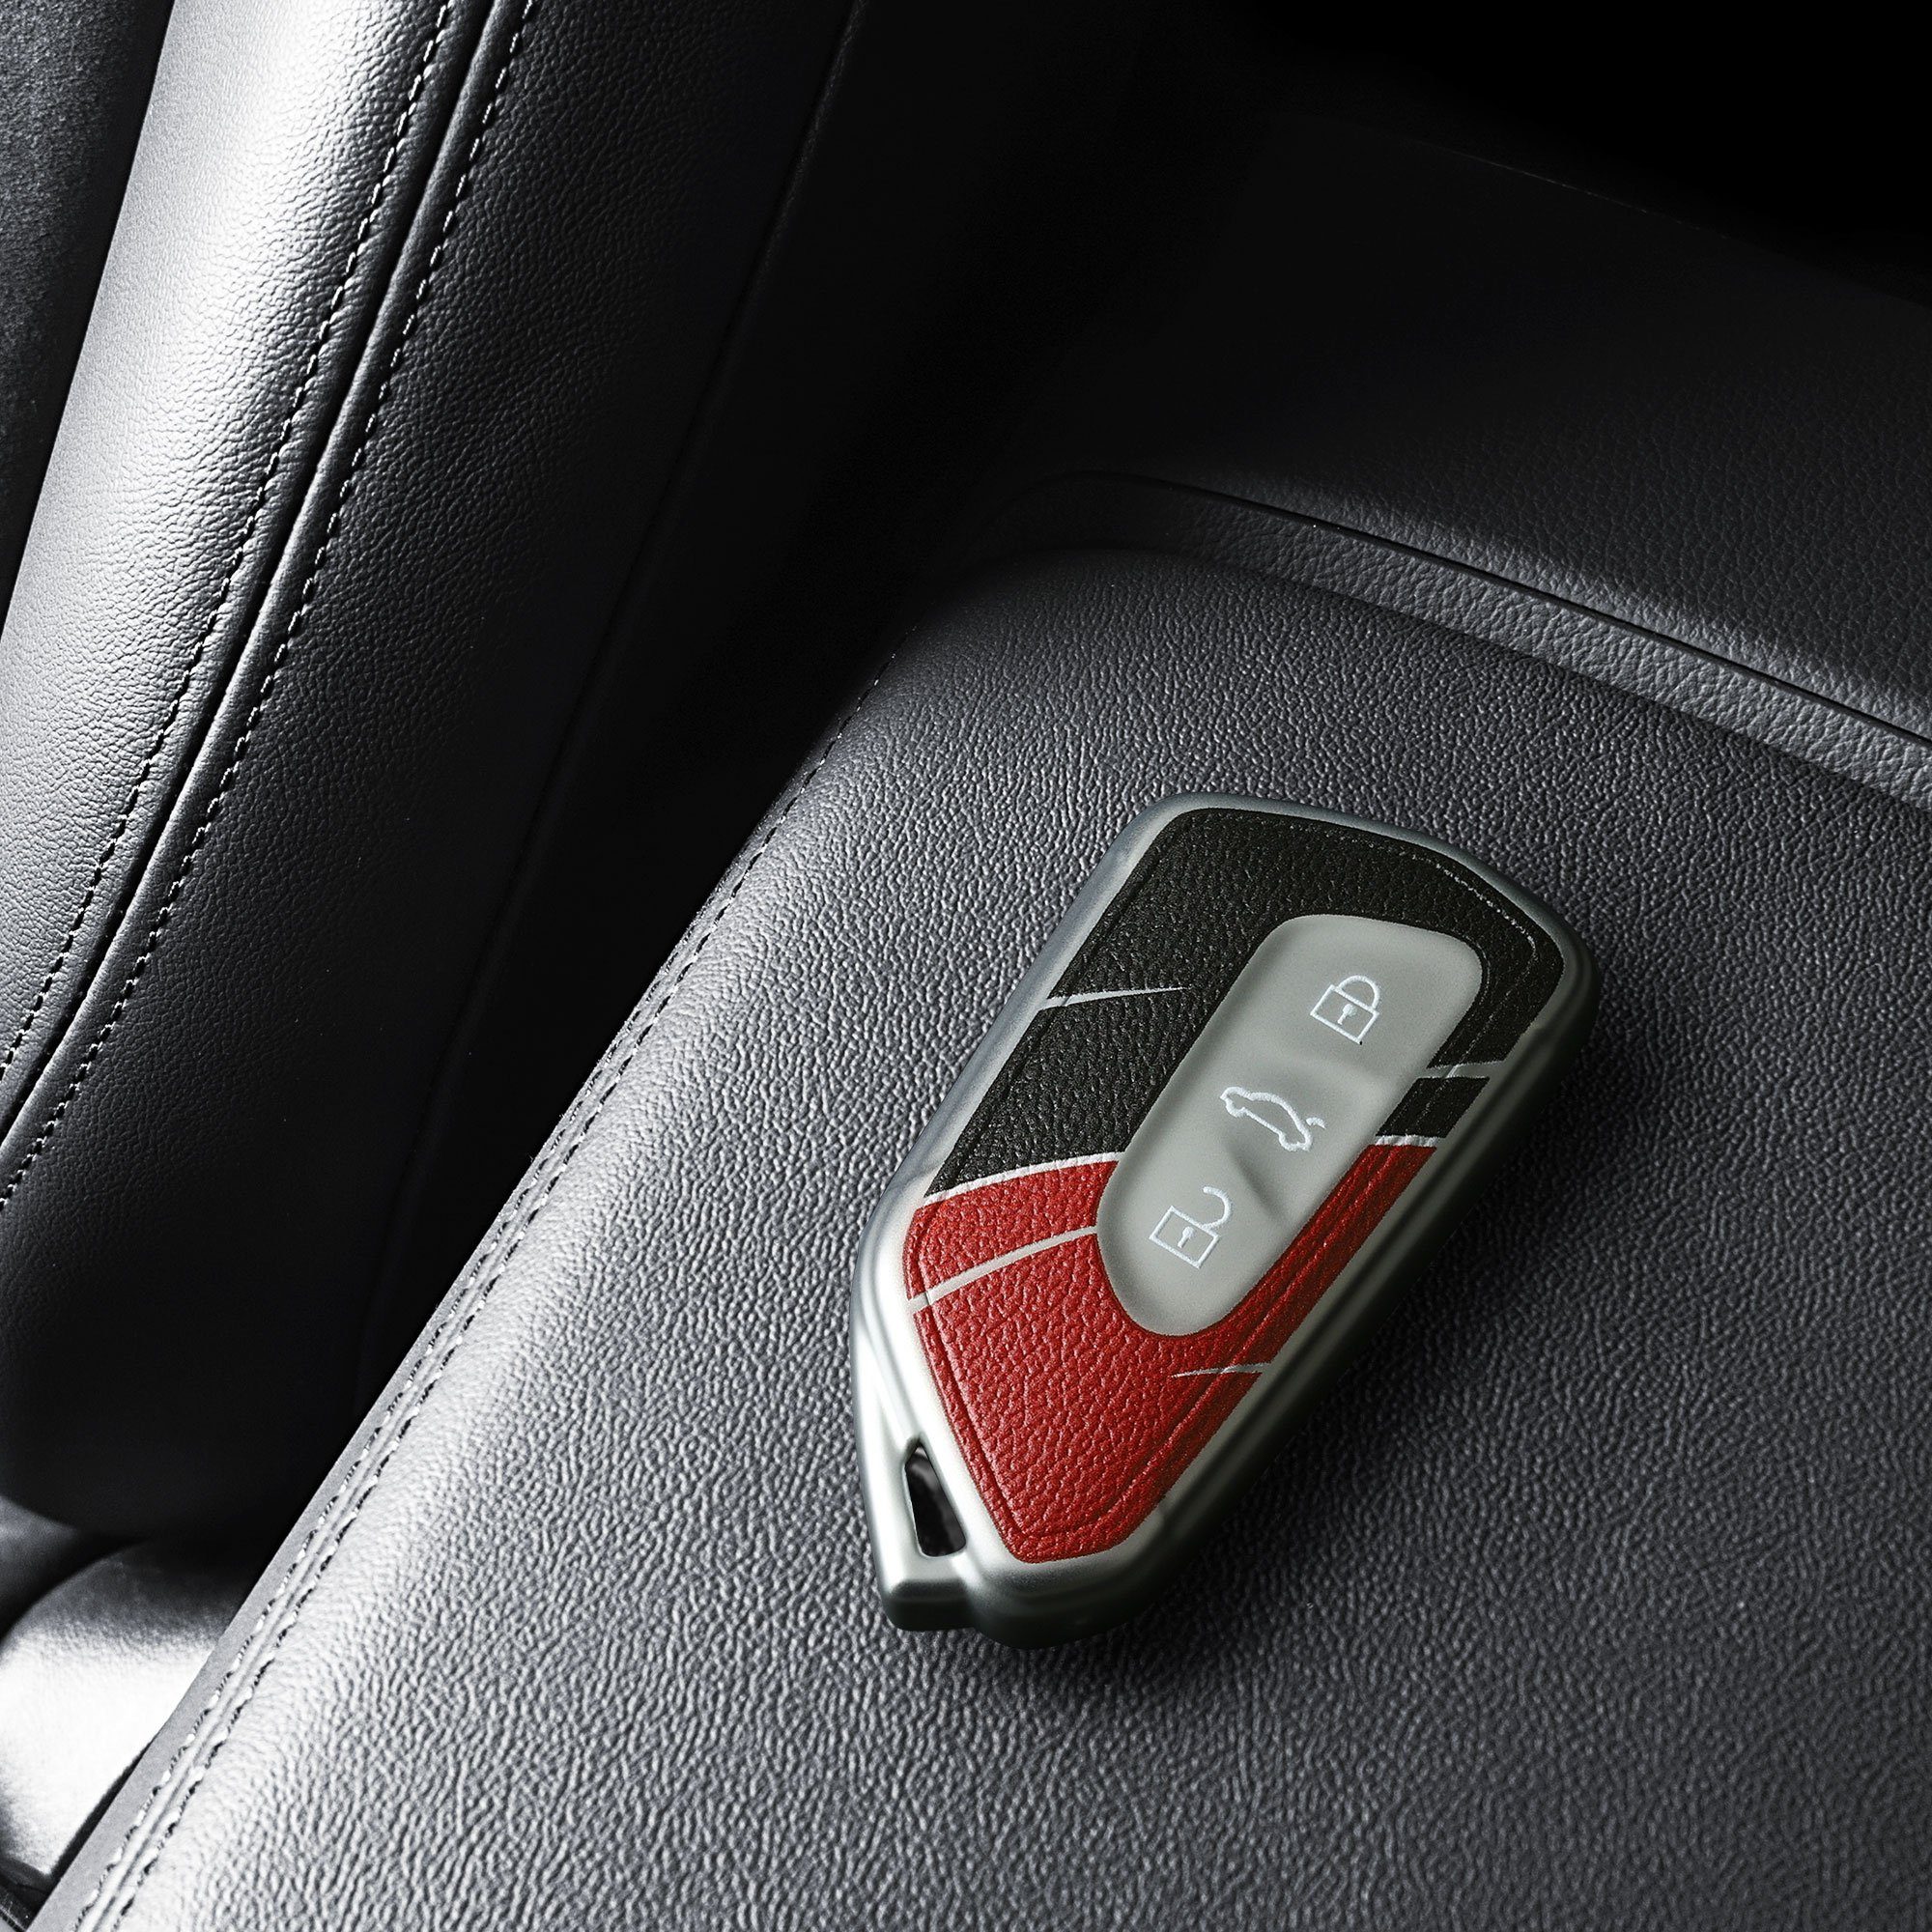 für Schlüsseltasche Golf kwmobile Cover VW TPU Grau 8, Autoschlüssel Schlüsselhülle Hülle Schutzhülle